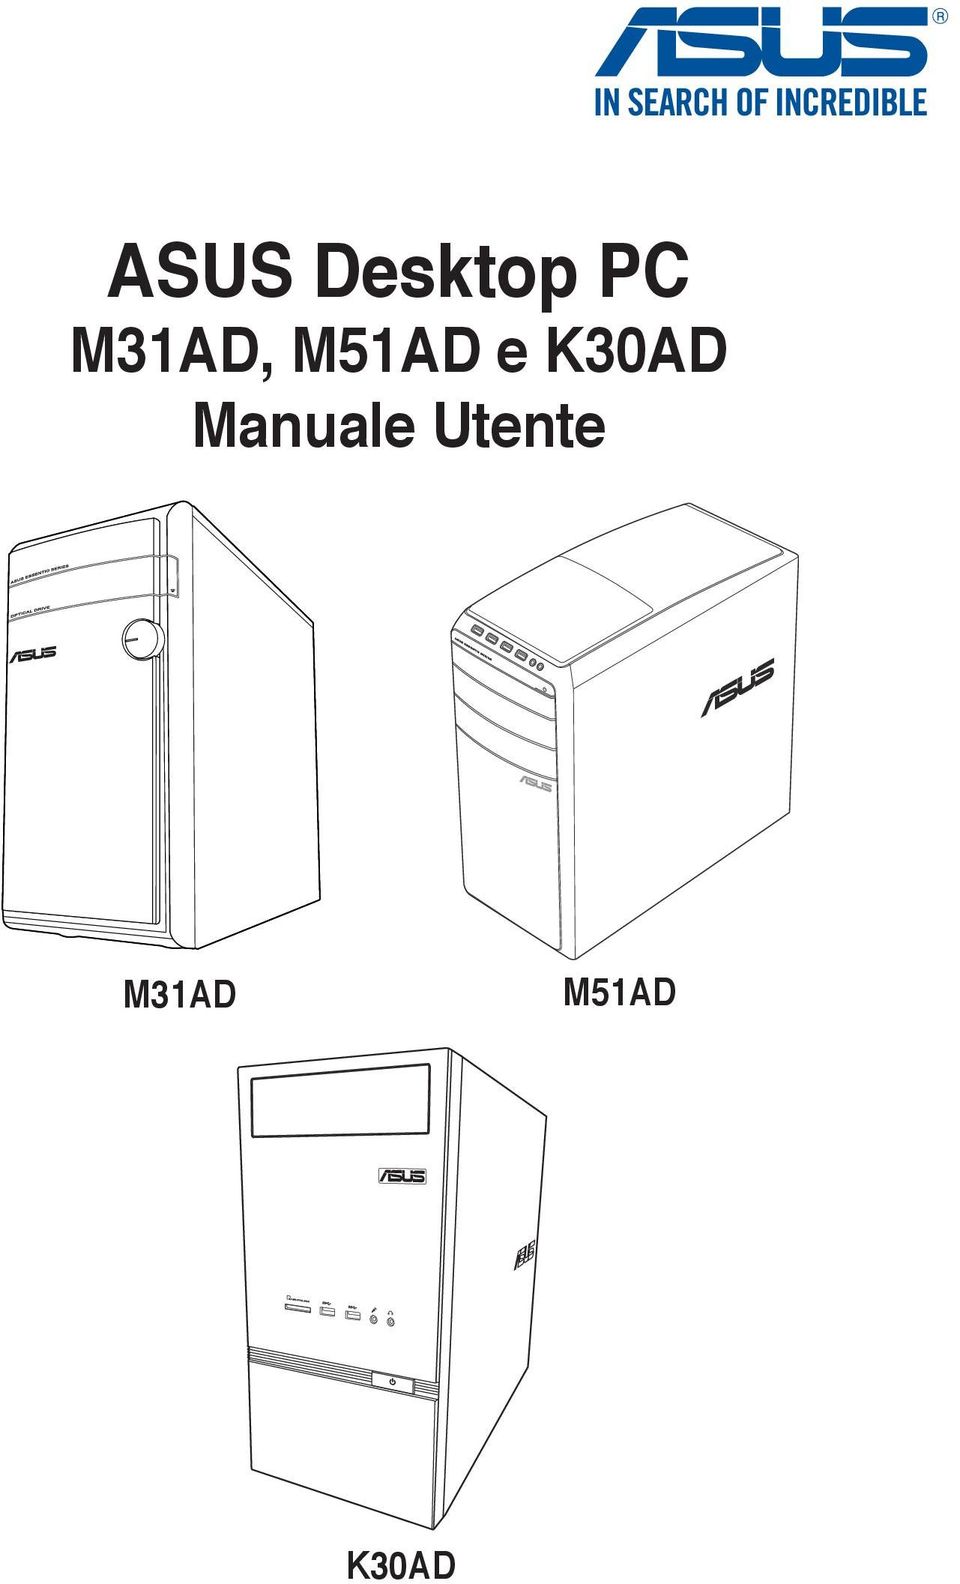 K30AD Manuale